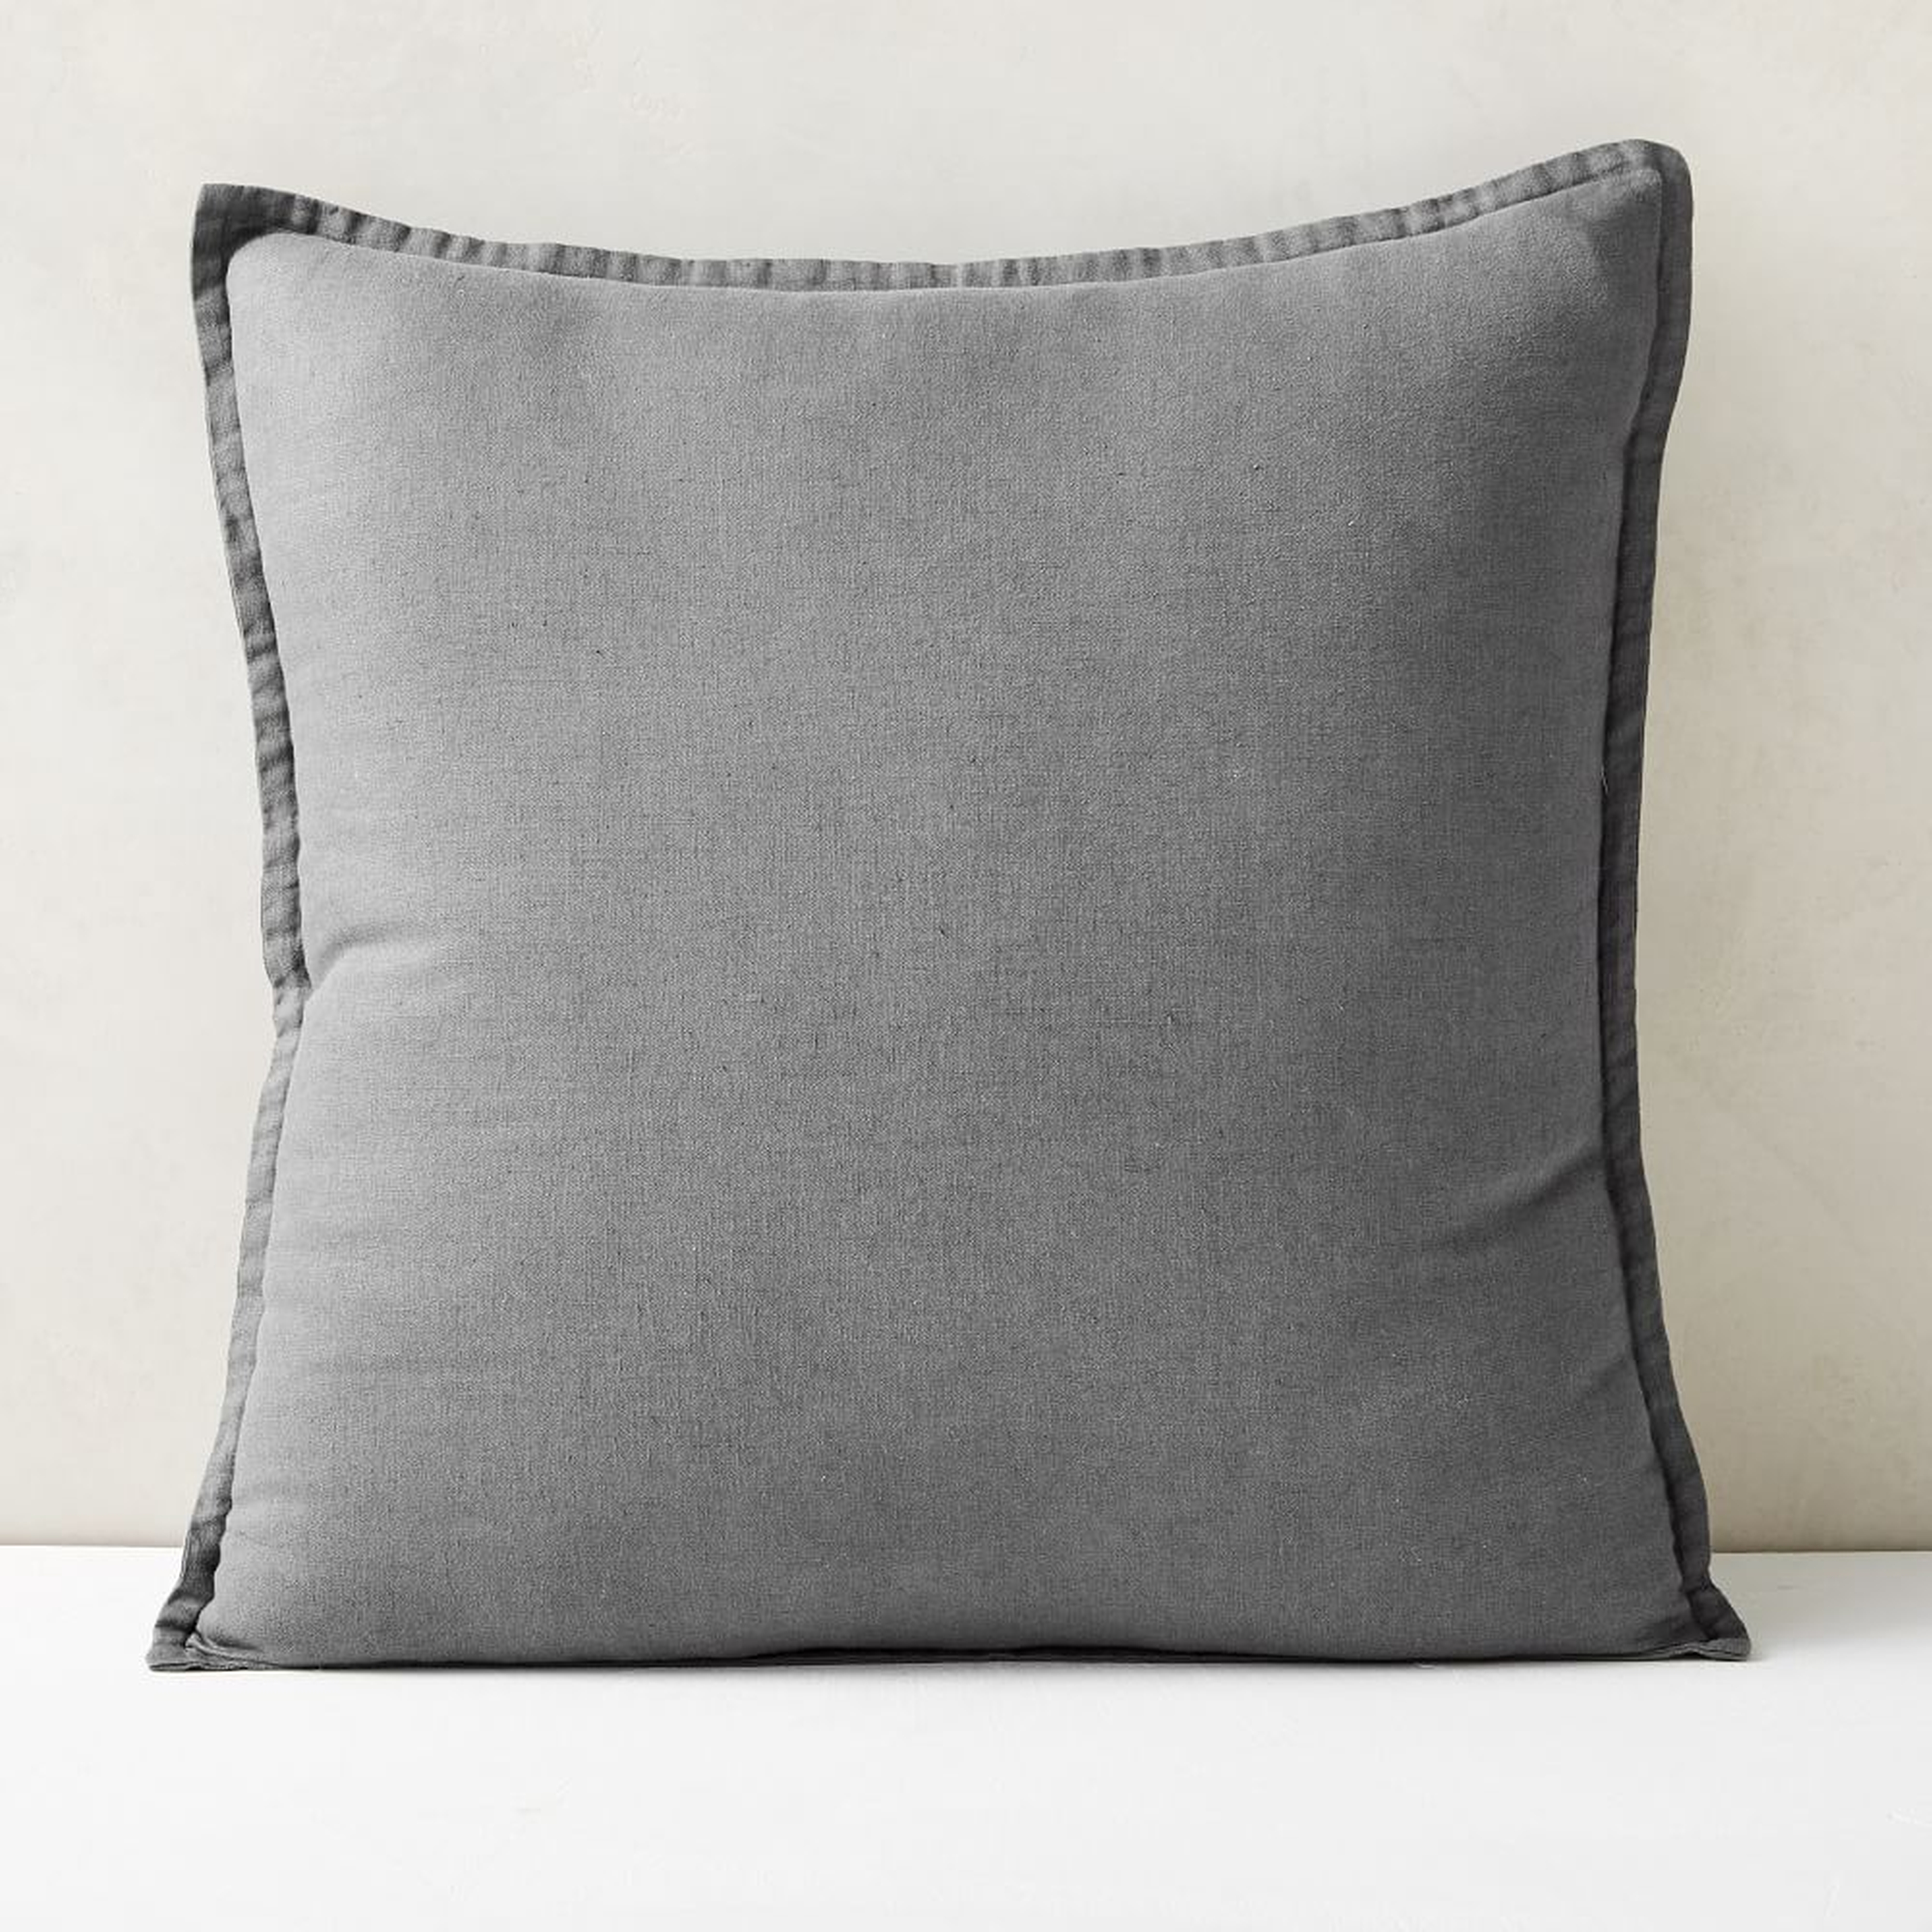 European Flax Linen Pillow Cover, 24"x24", Graphite - West Elm